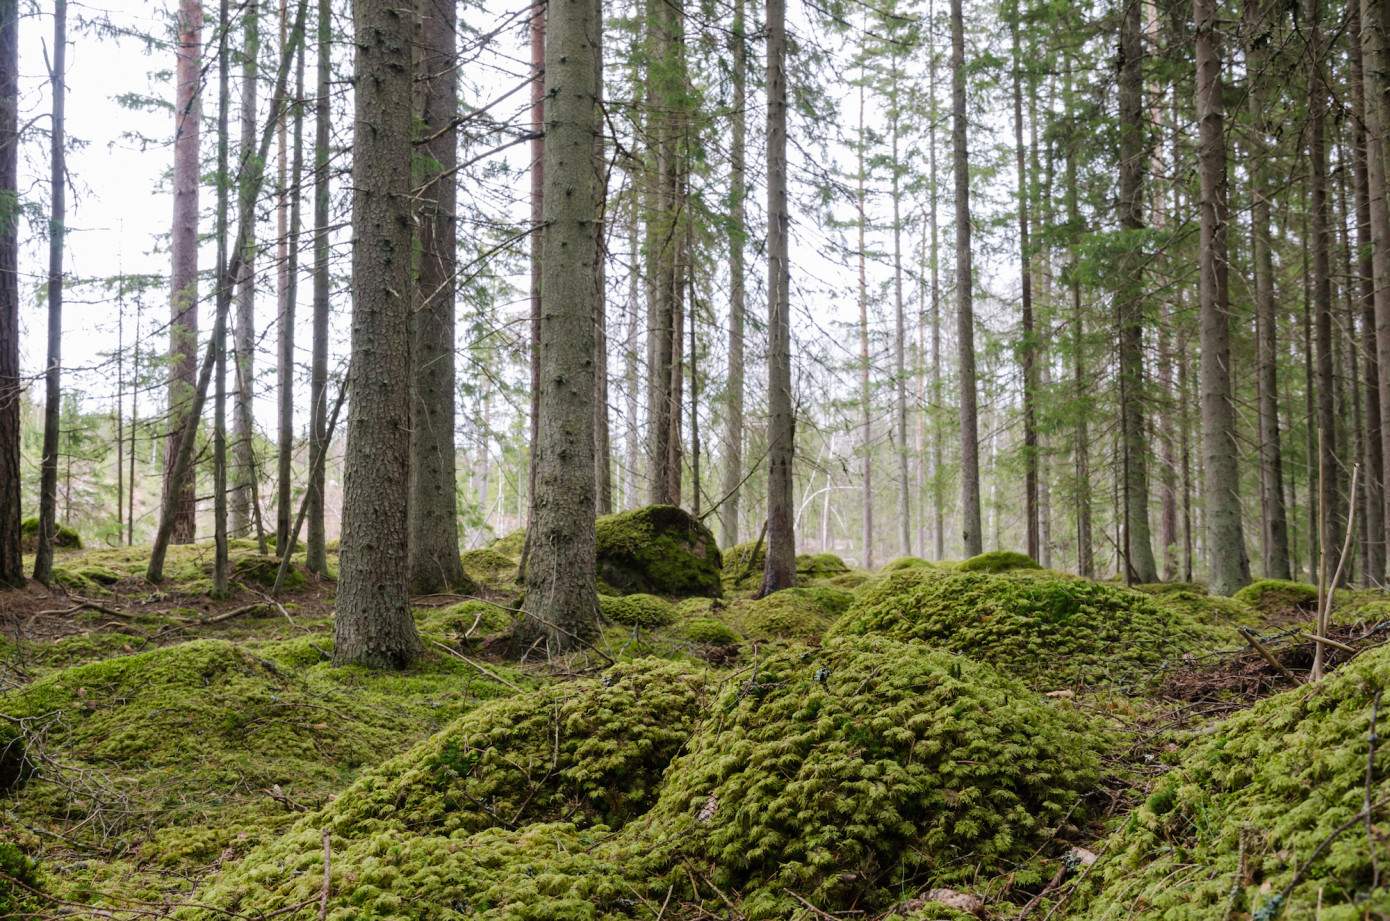 Södra, IKEA of Sweden, Linnaeus University partner to promote forestry